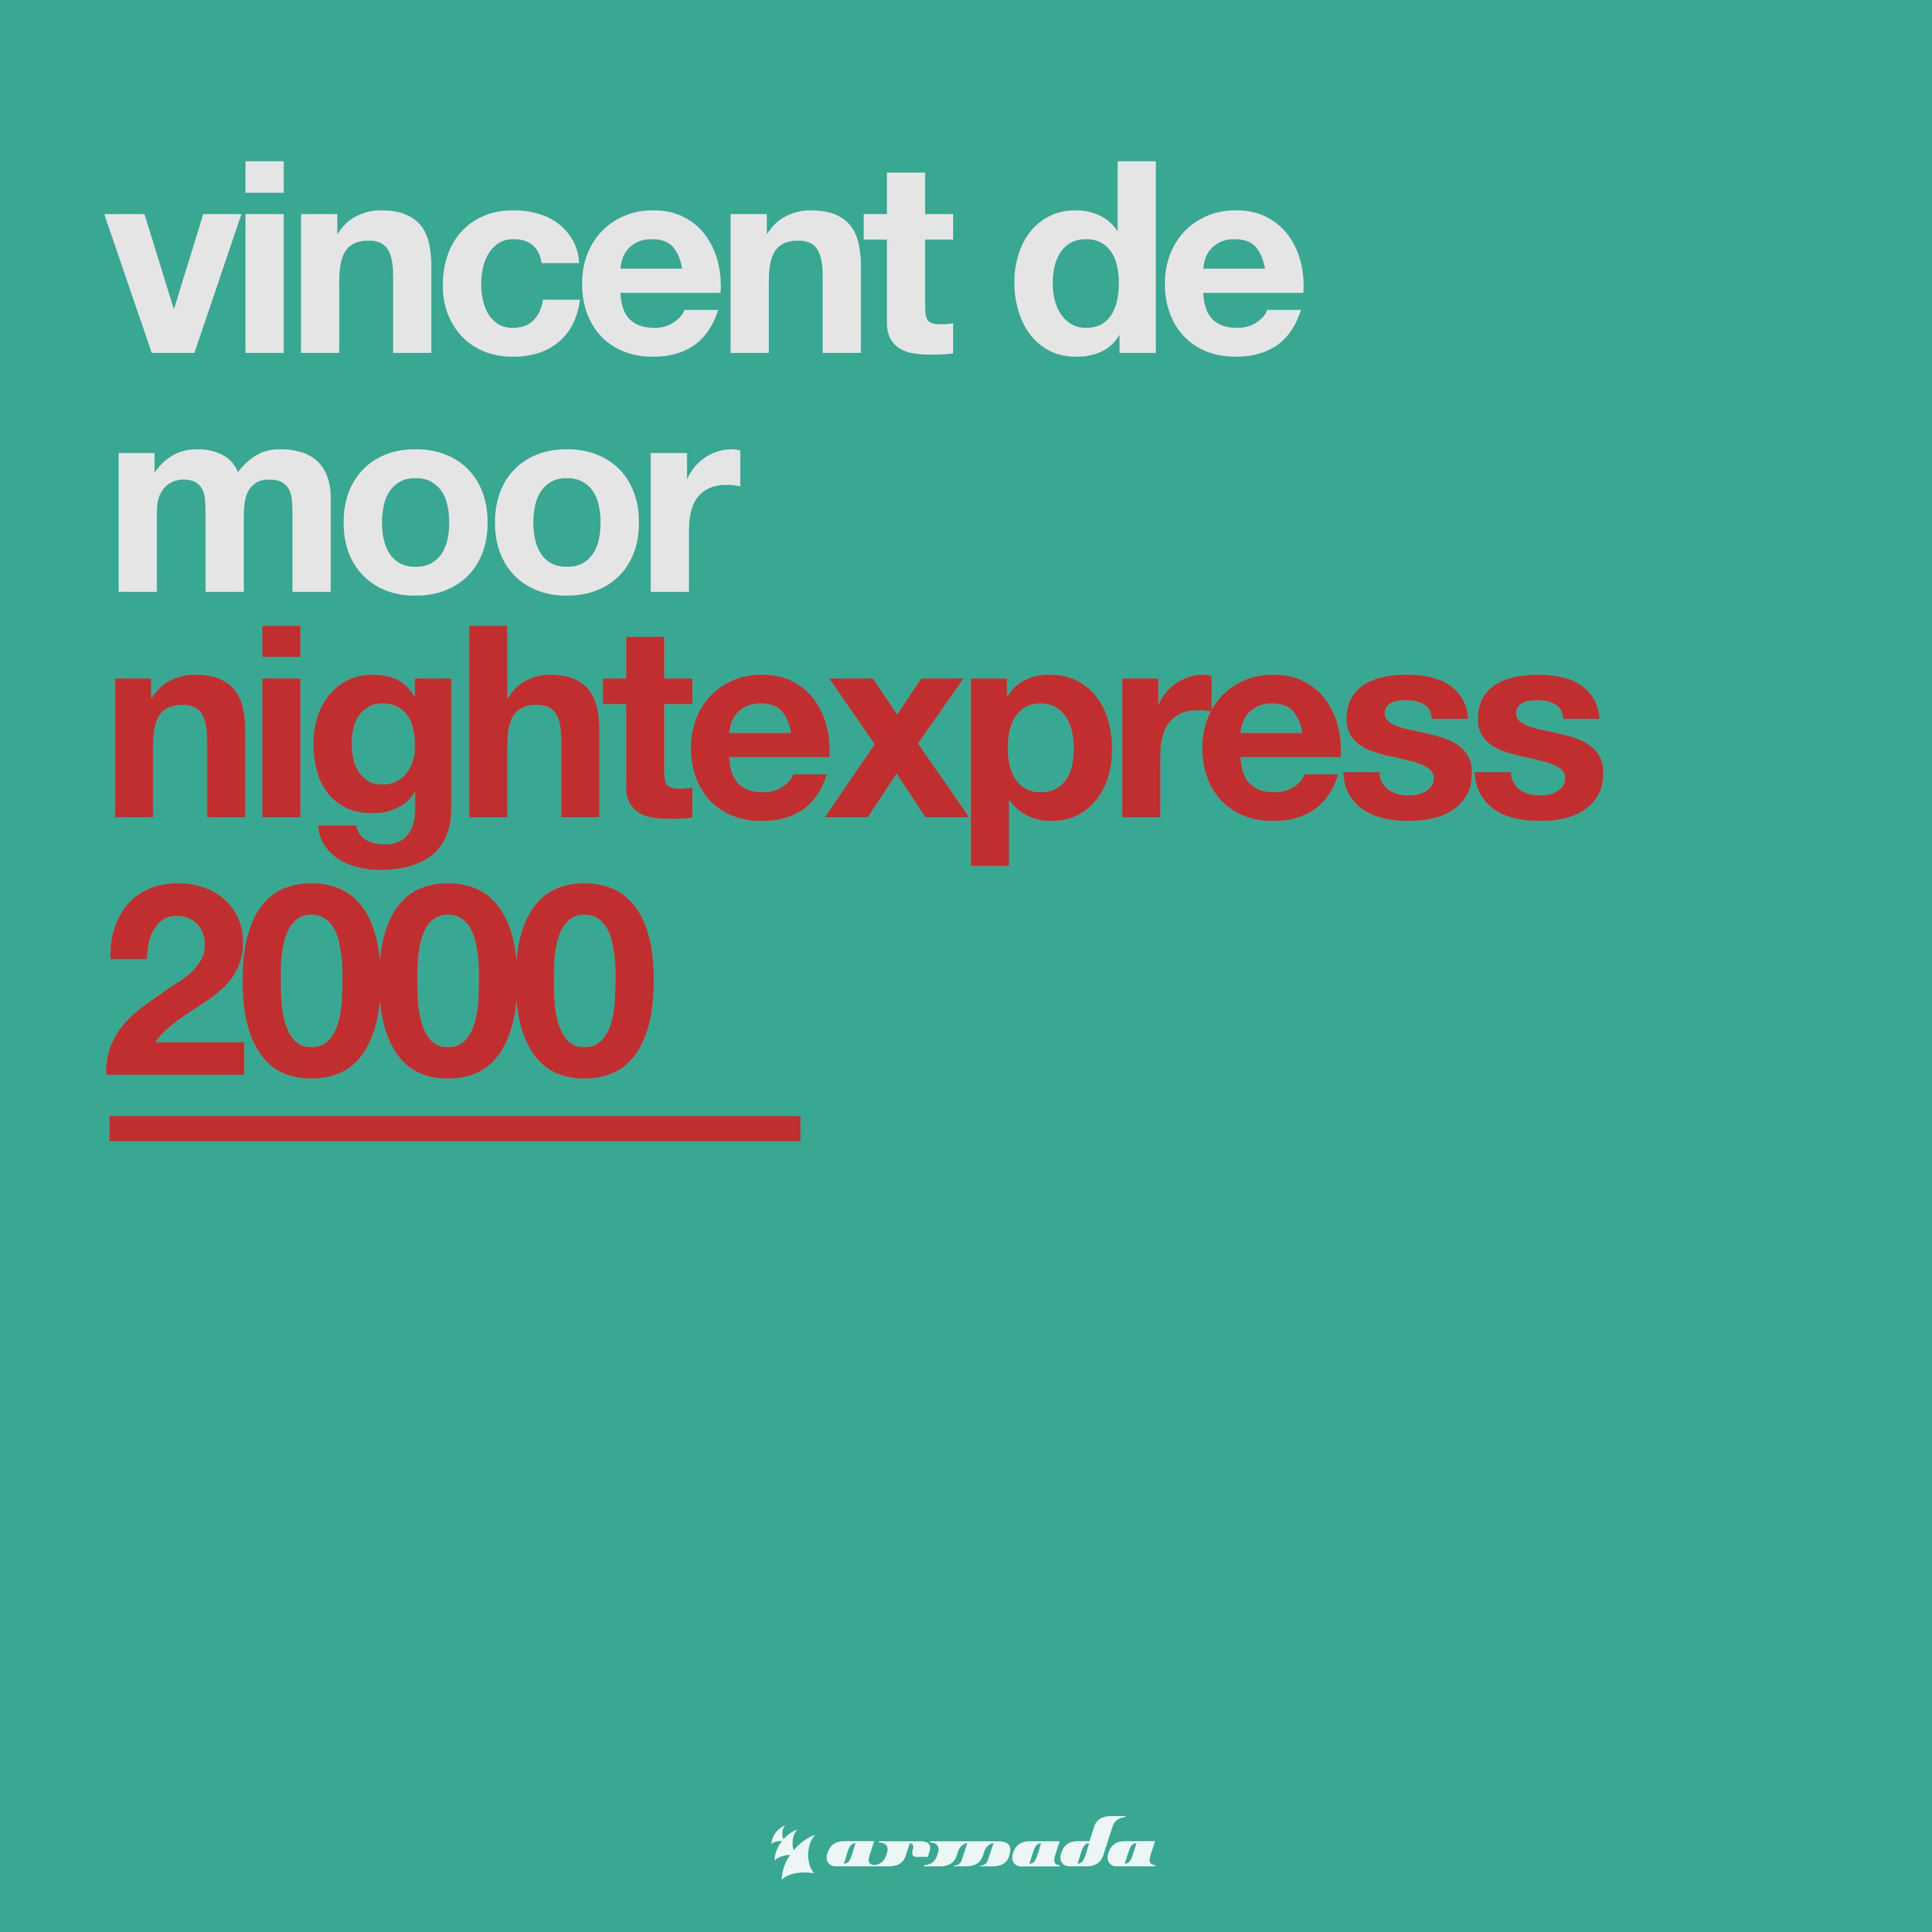 Nightexpress 2000